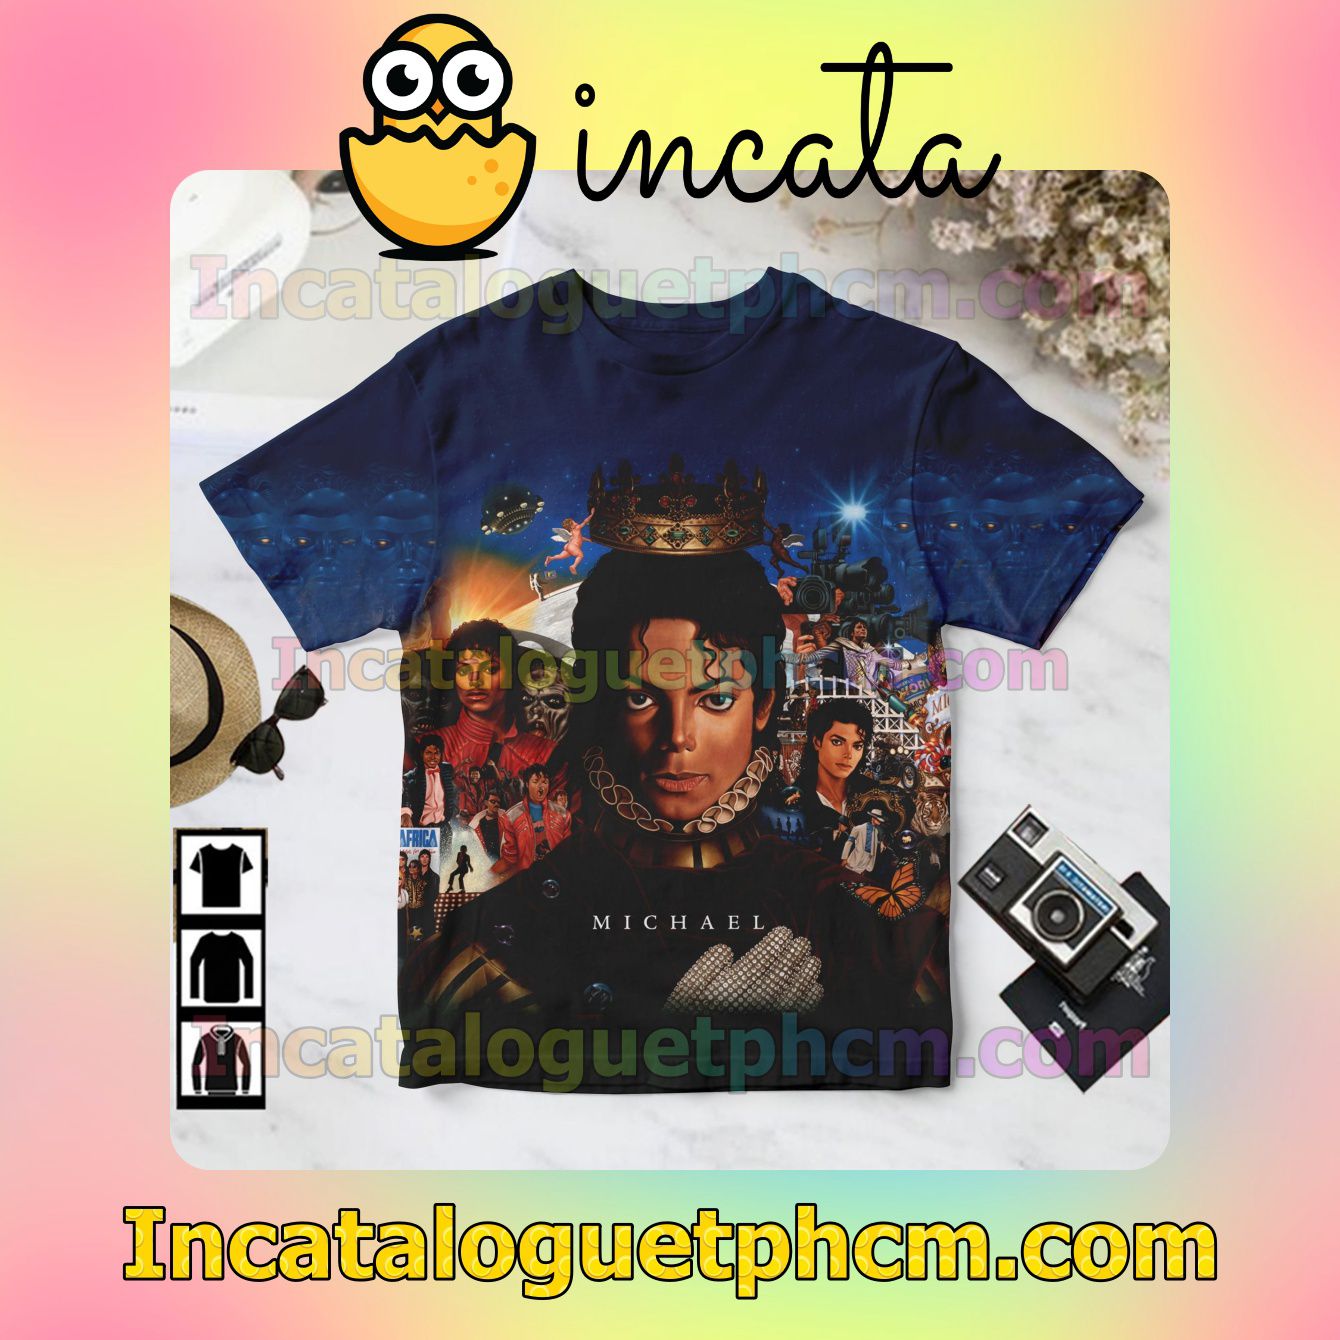 Michael Jackson Promotional Poster Gift Shirt